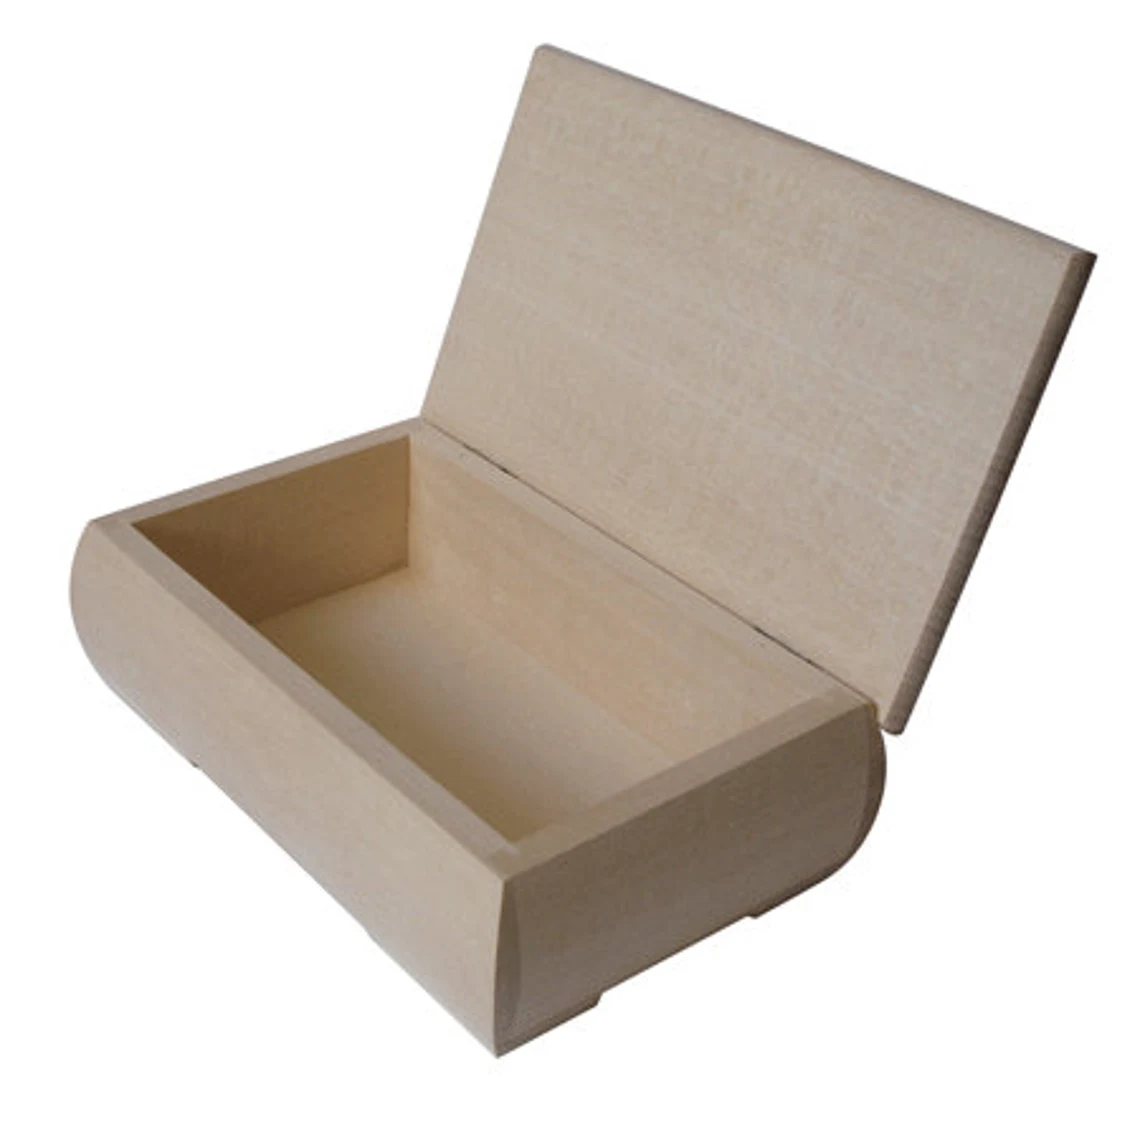 Blank Wooden Keepsake Box with Lid - White Background